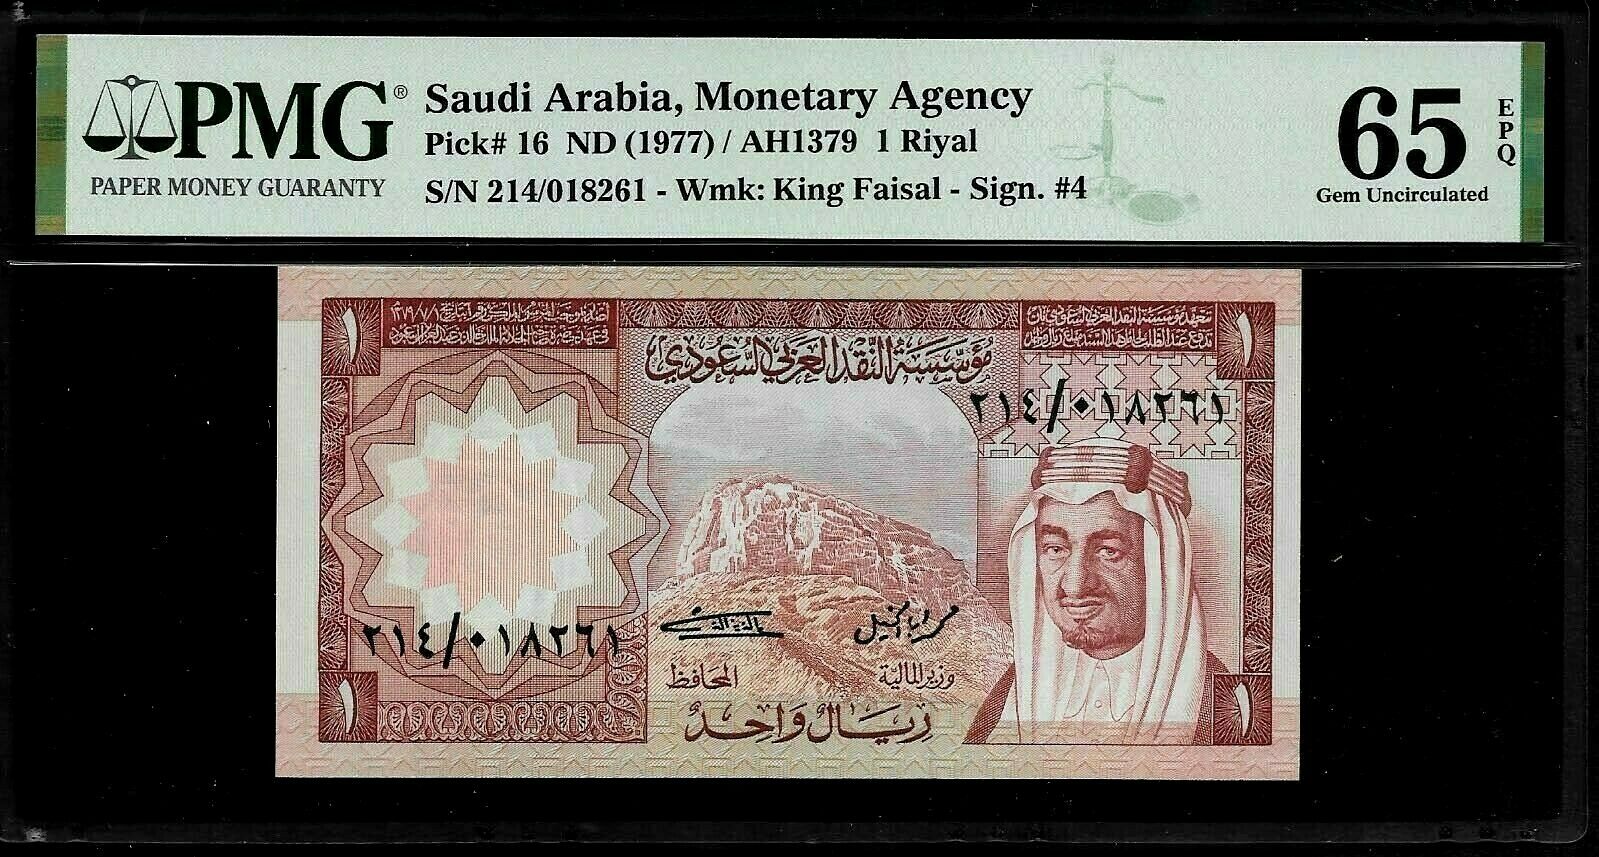 Saudi Arabia 1 Riyal 1977 PMG 65 EPQ UNC P#16